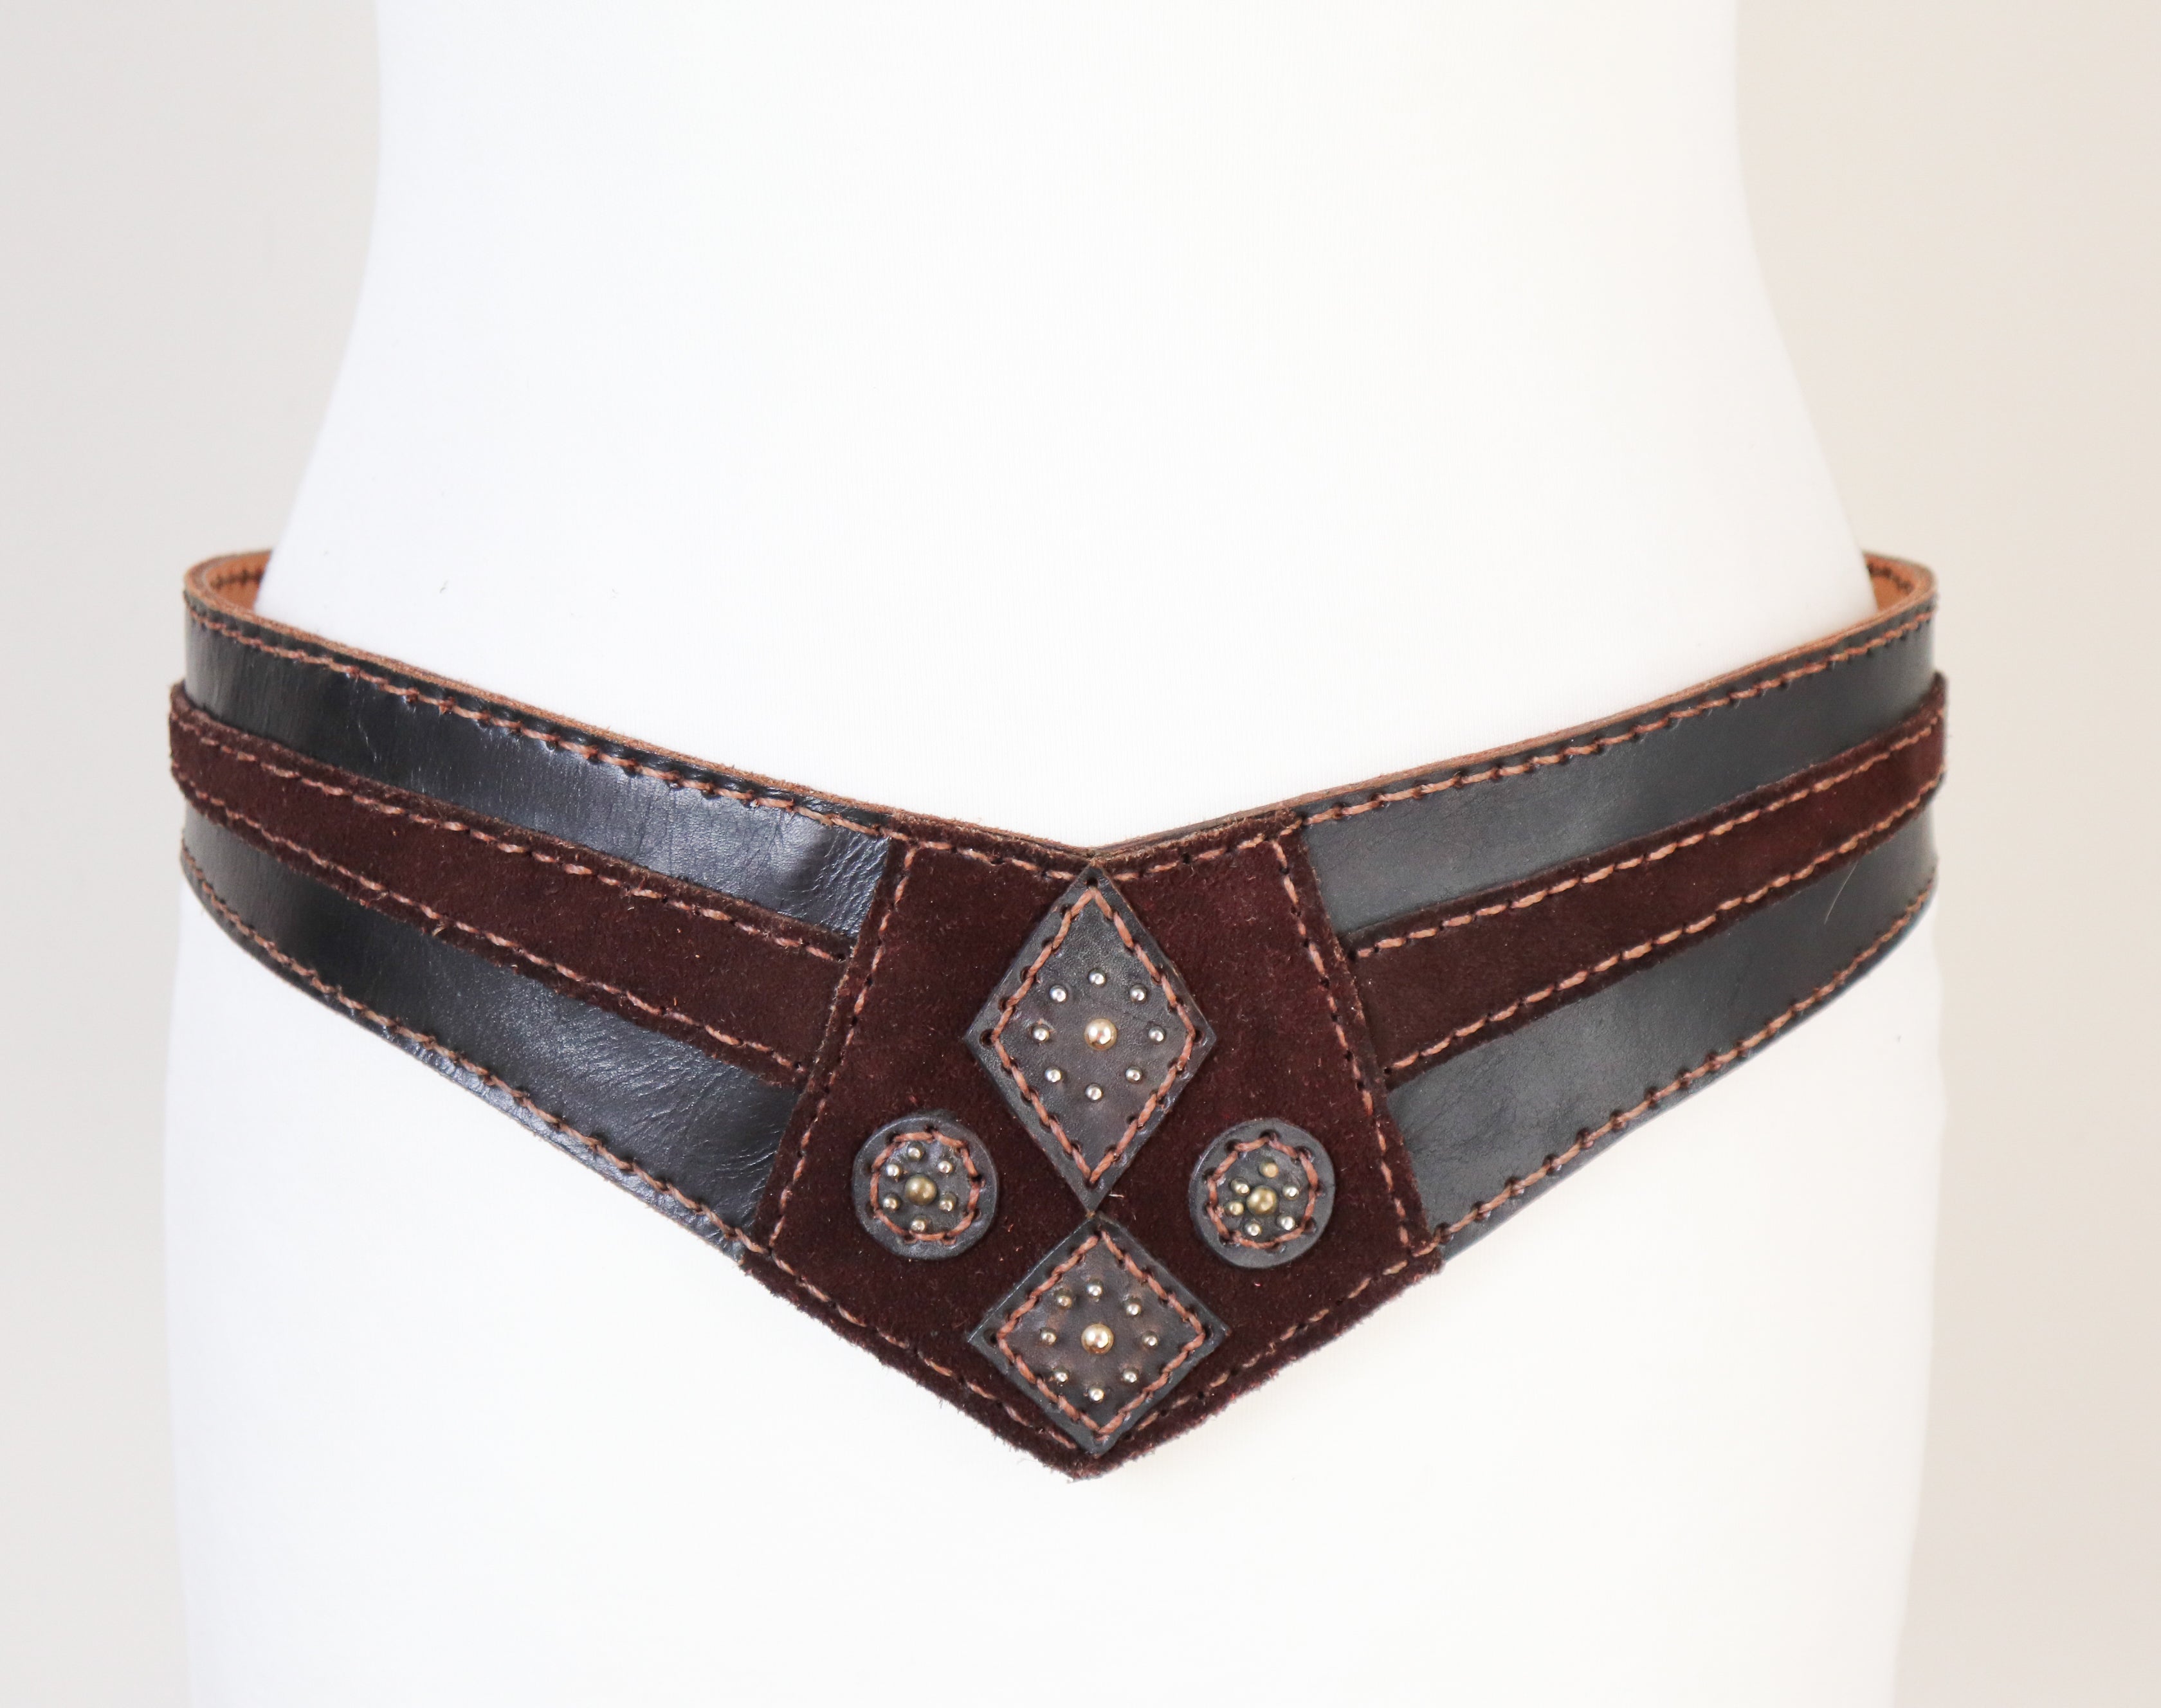 Rainer Rosner Vintage Corset Belt - 1980s - Brown Suede Leather - Wide  - Medium